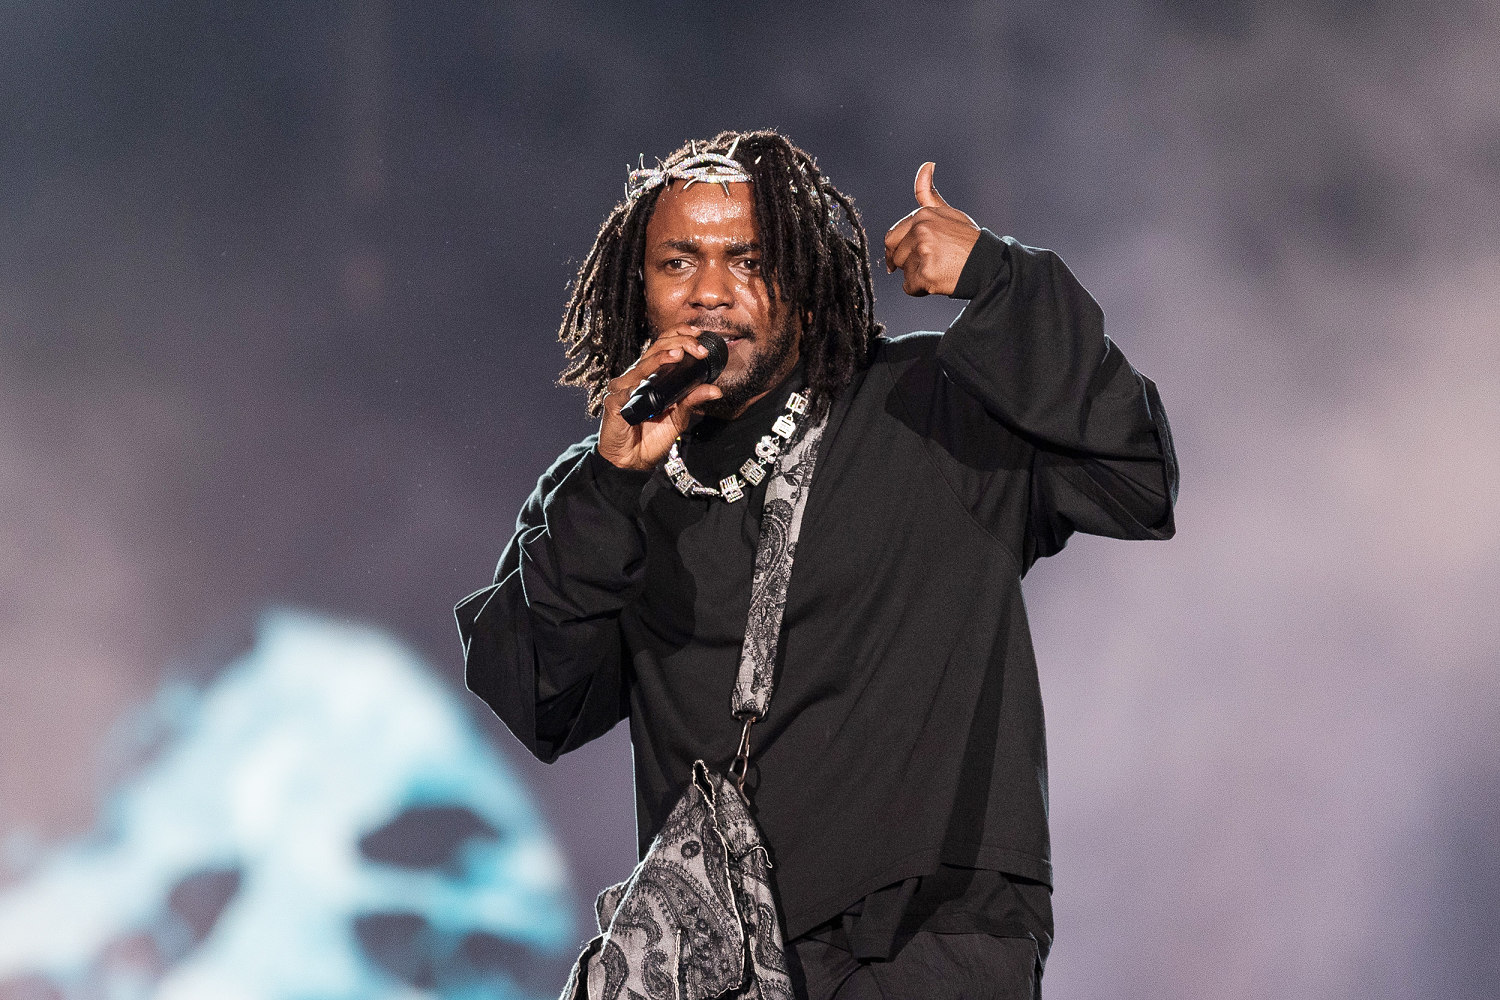 Kendrick Lamar nabs No. 1 spot on Billboard Hot 100 after Drake feud